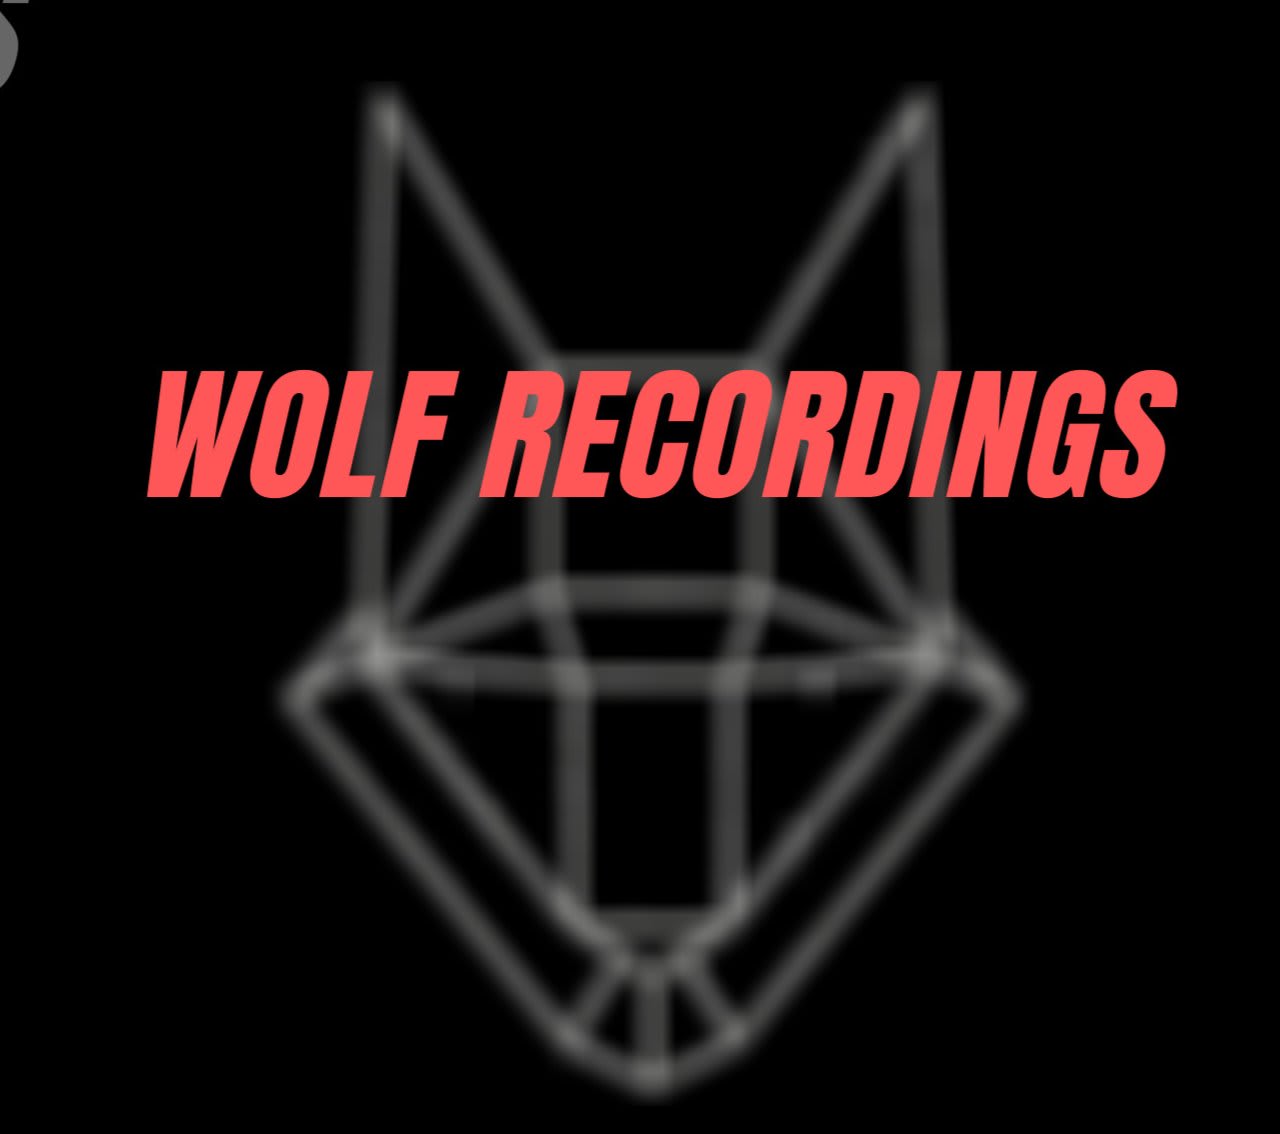 Wolf Recordings